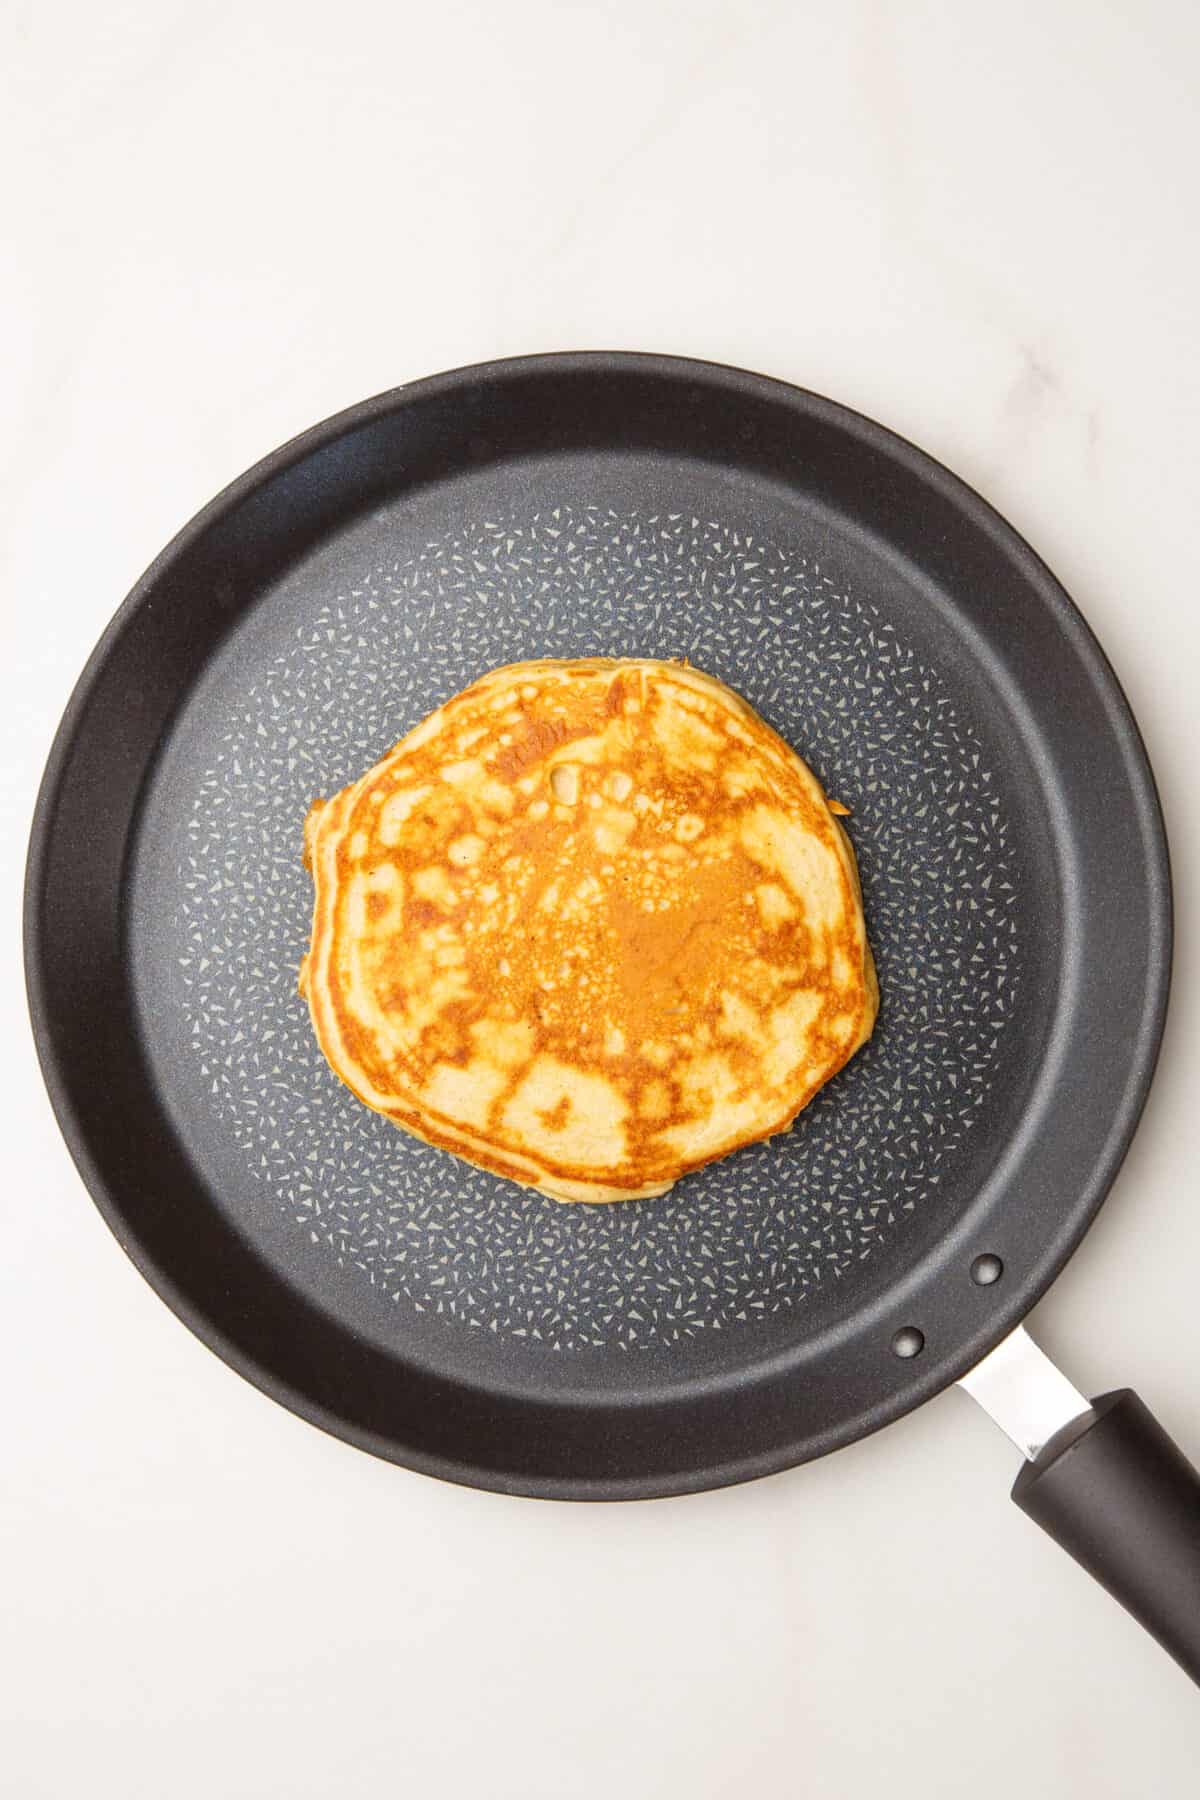 peanut butter pancake in a pan.